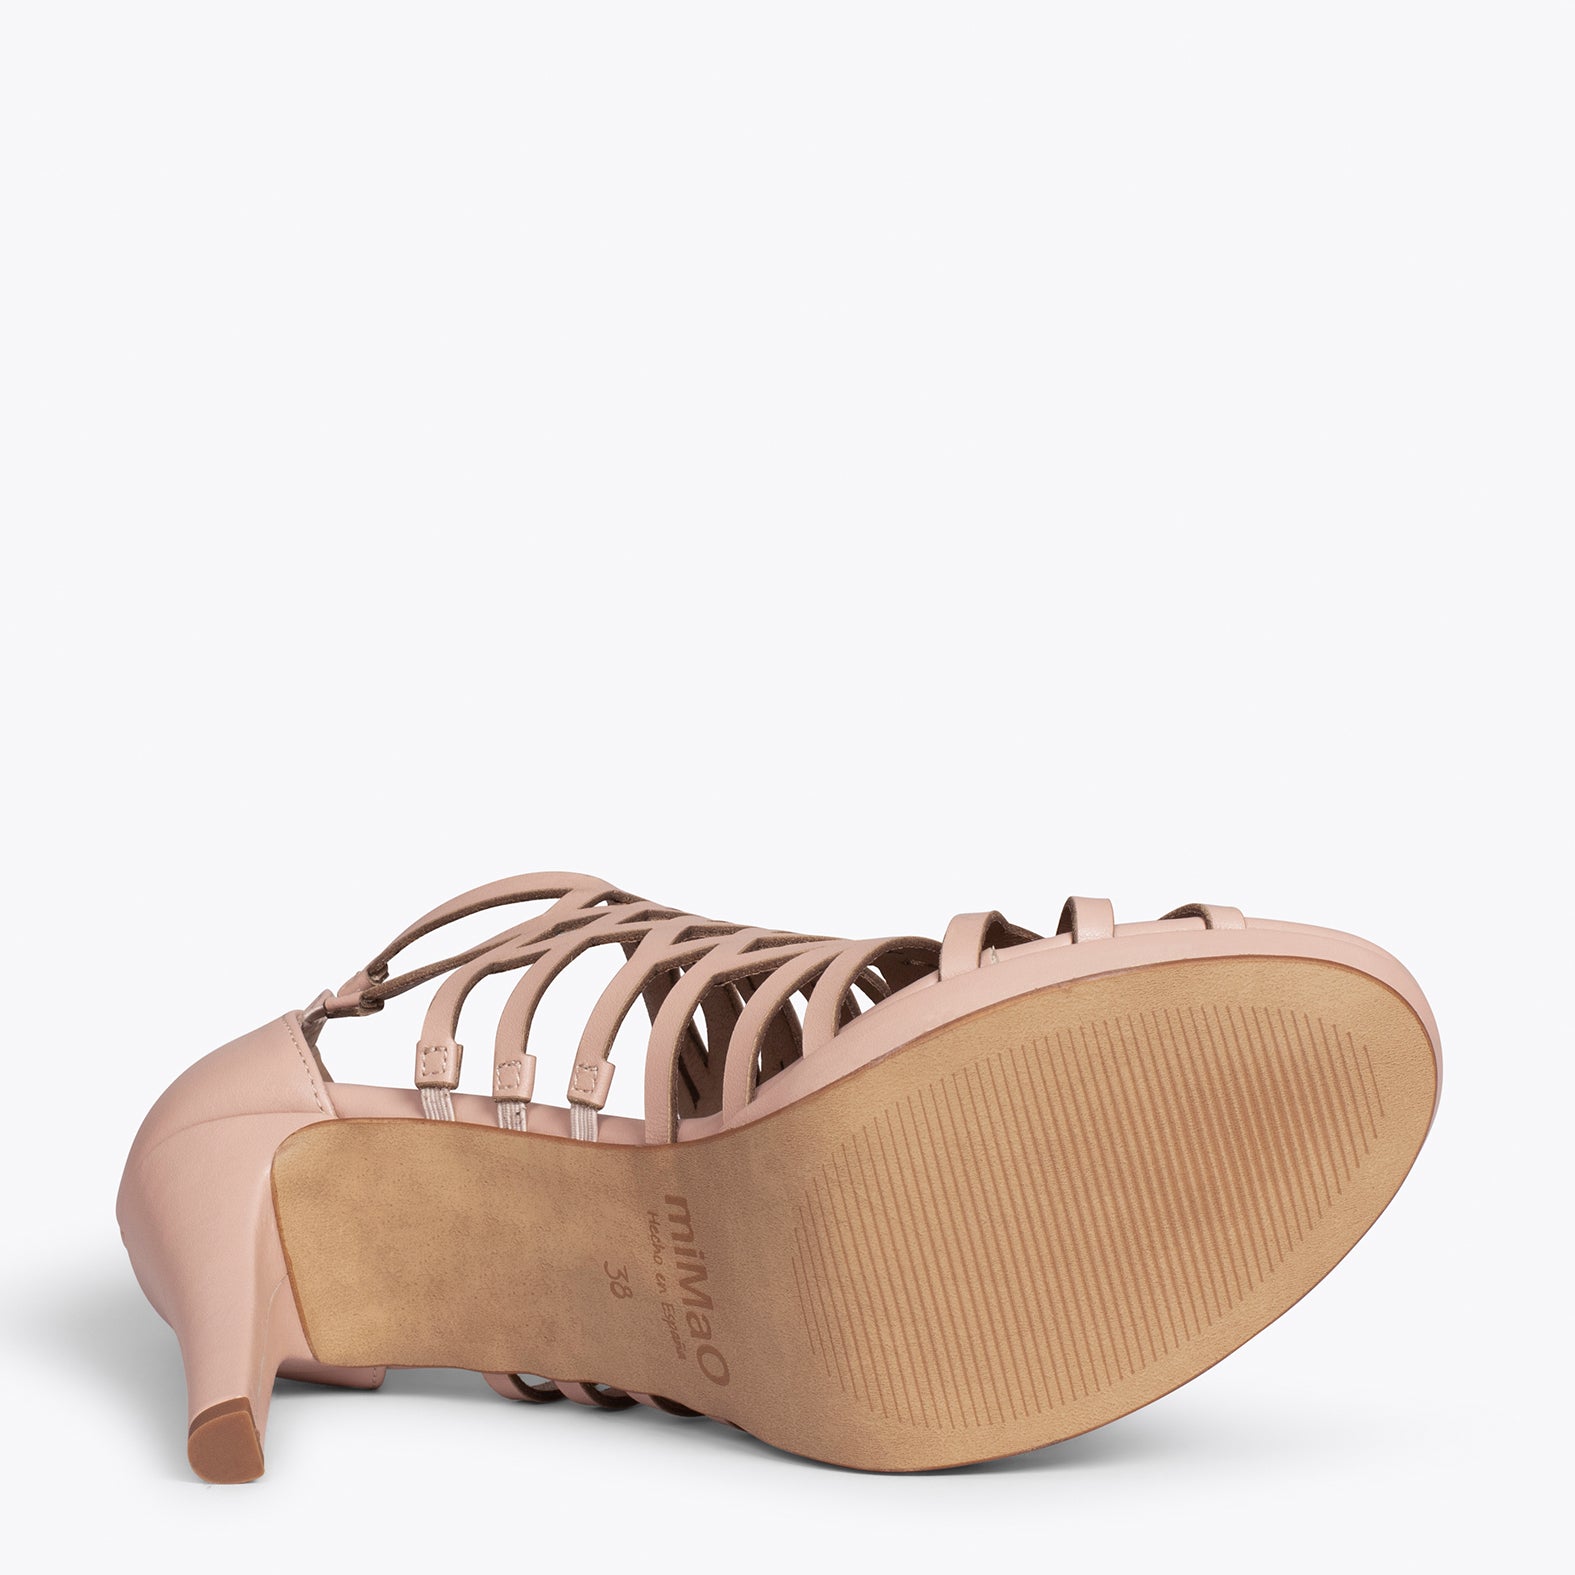 GALA – NUDE high heel party sandals